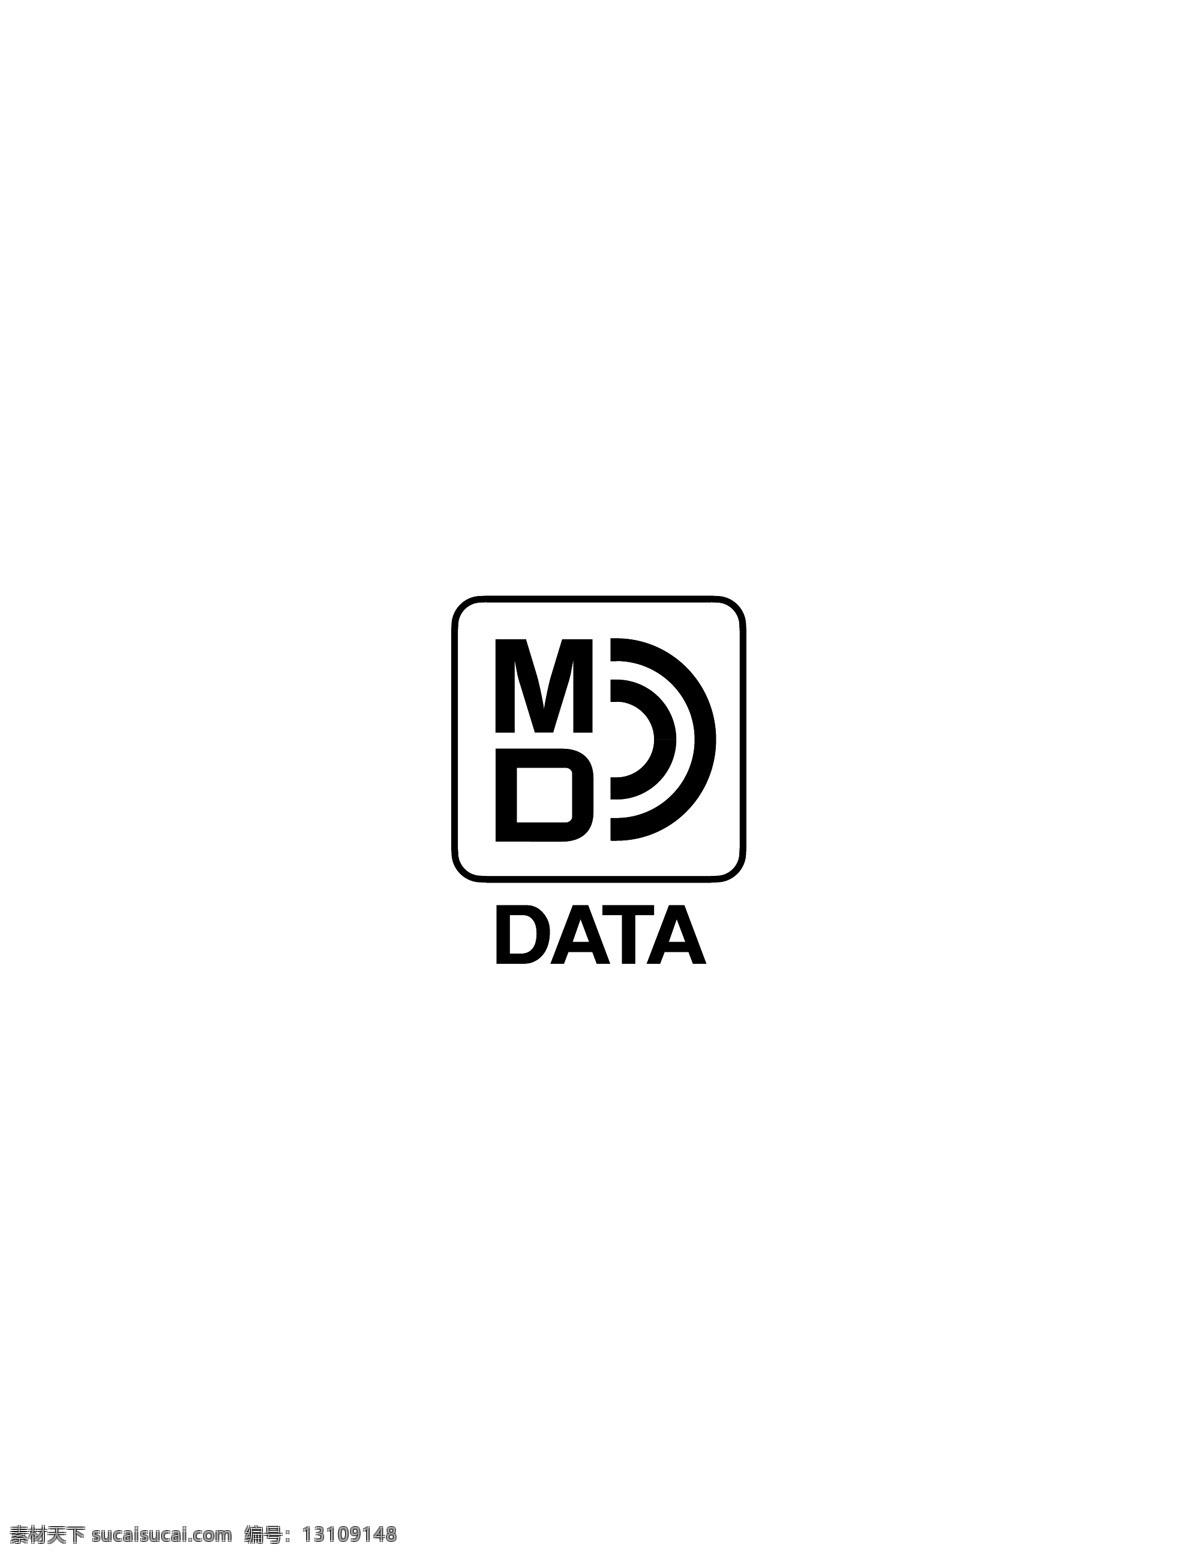 logo大全 logo 设计欣赏 md 商业矢量 矢量下载 data 传统 企业 标志设计 欣赏 网页矢量 矢量图 其他矢量图